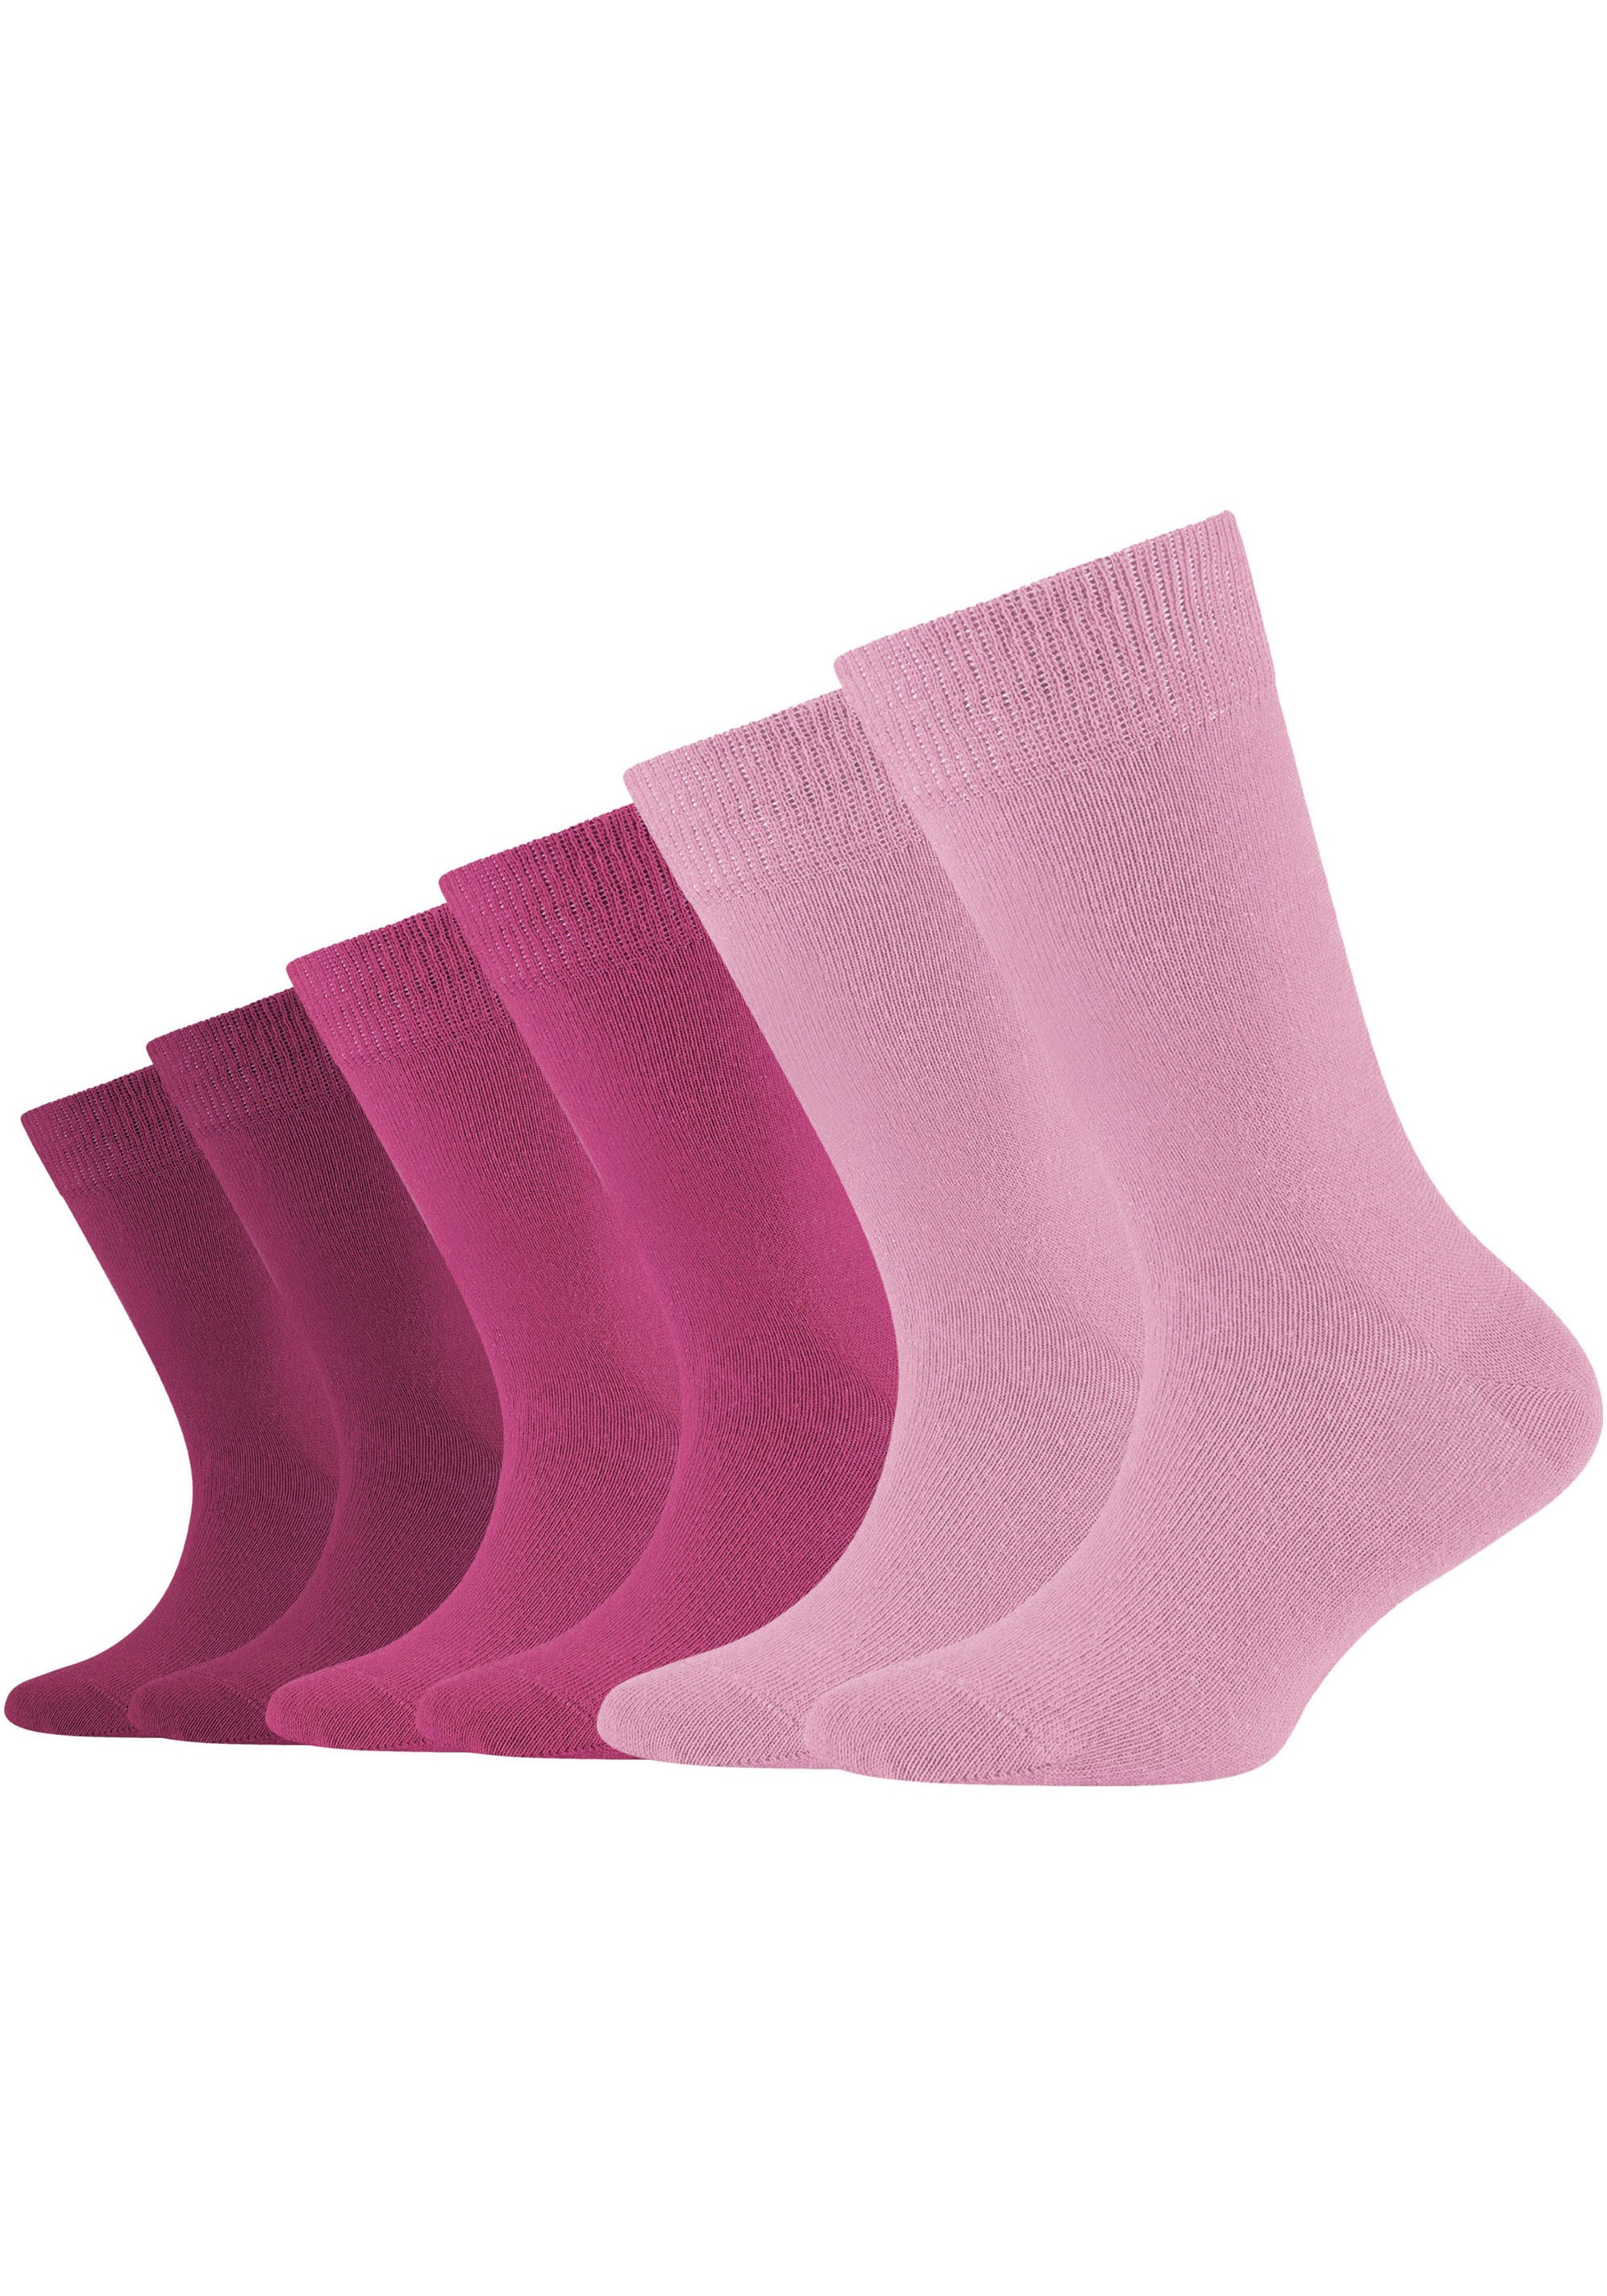 Camano Hoher bestellen 6 Socken, Paar), online (Packung, Anteil Baumwolle an gekämmter